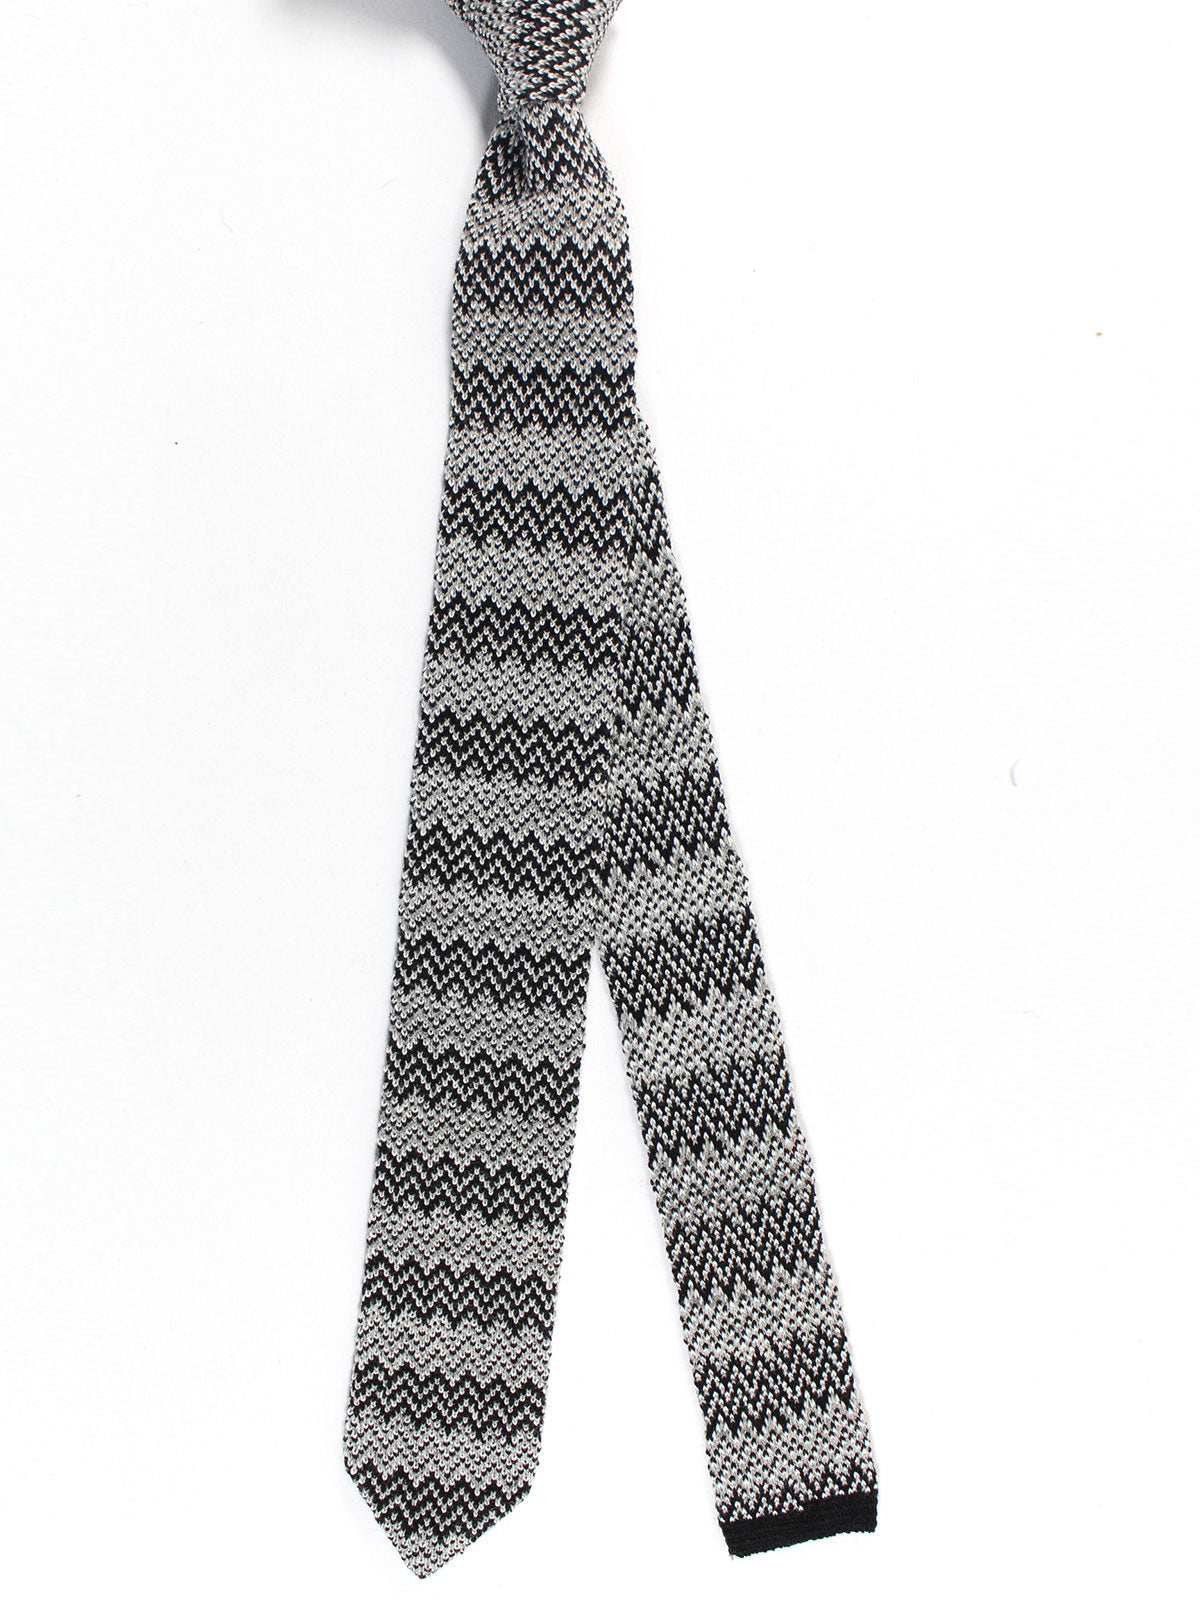 Missoni Tie Black Gray Zig Zag Design